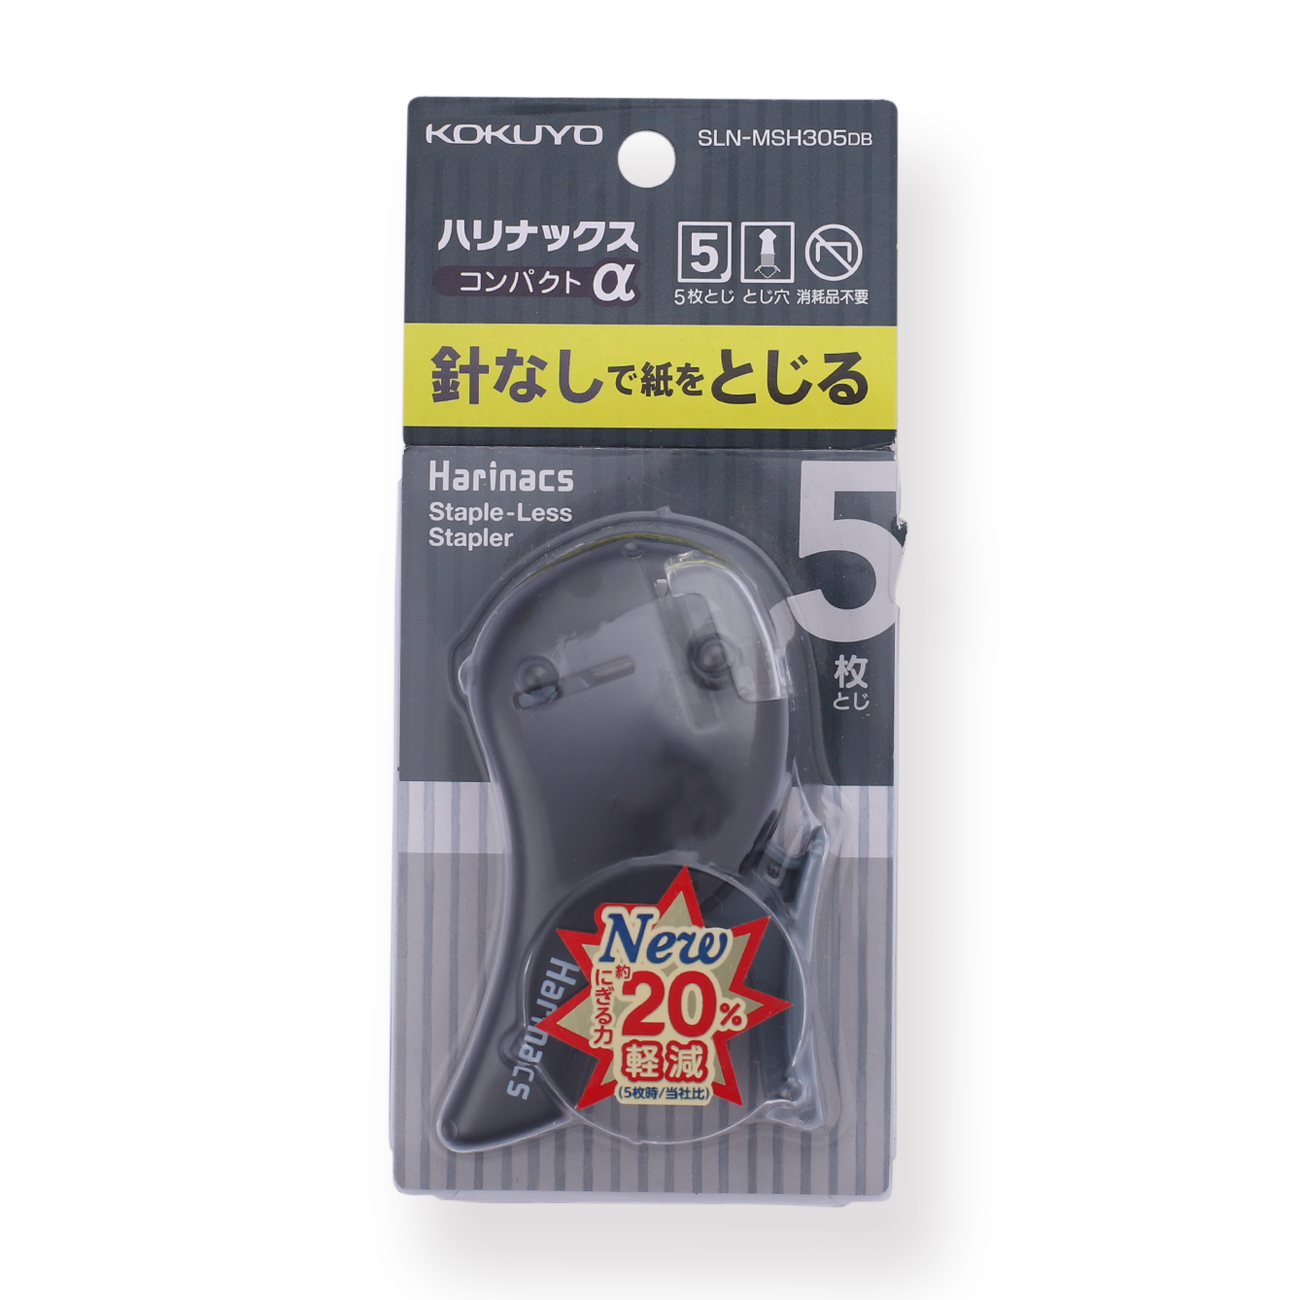 Kokuyo SLN-MSH305 Harinacs Stapleless Stapler - Compact Alpha - Black